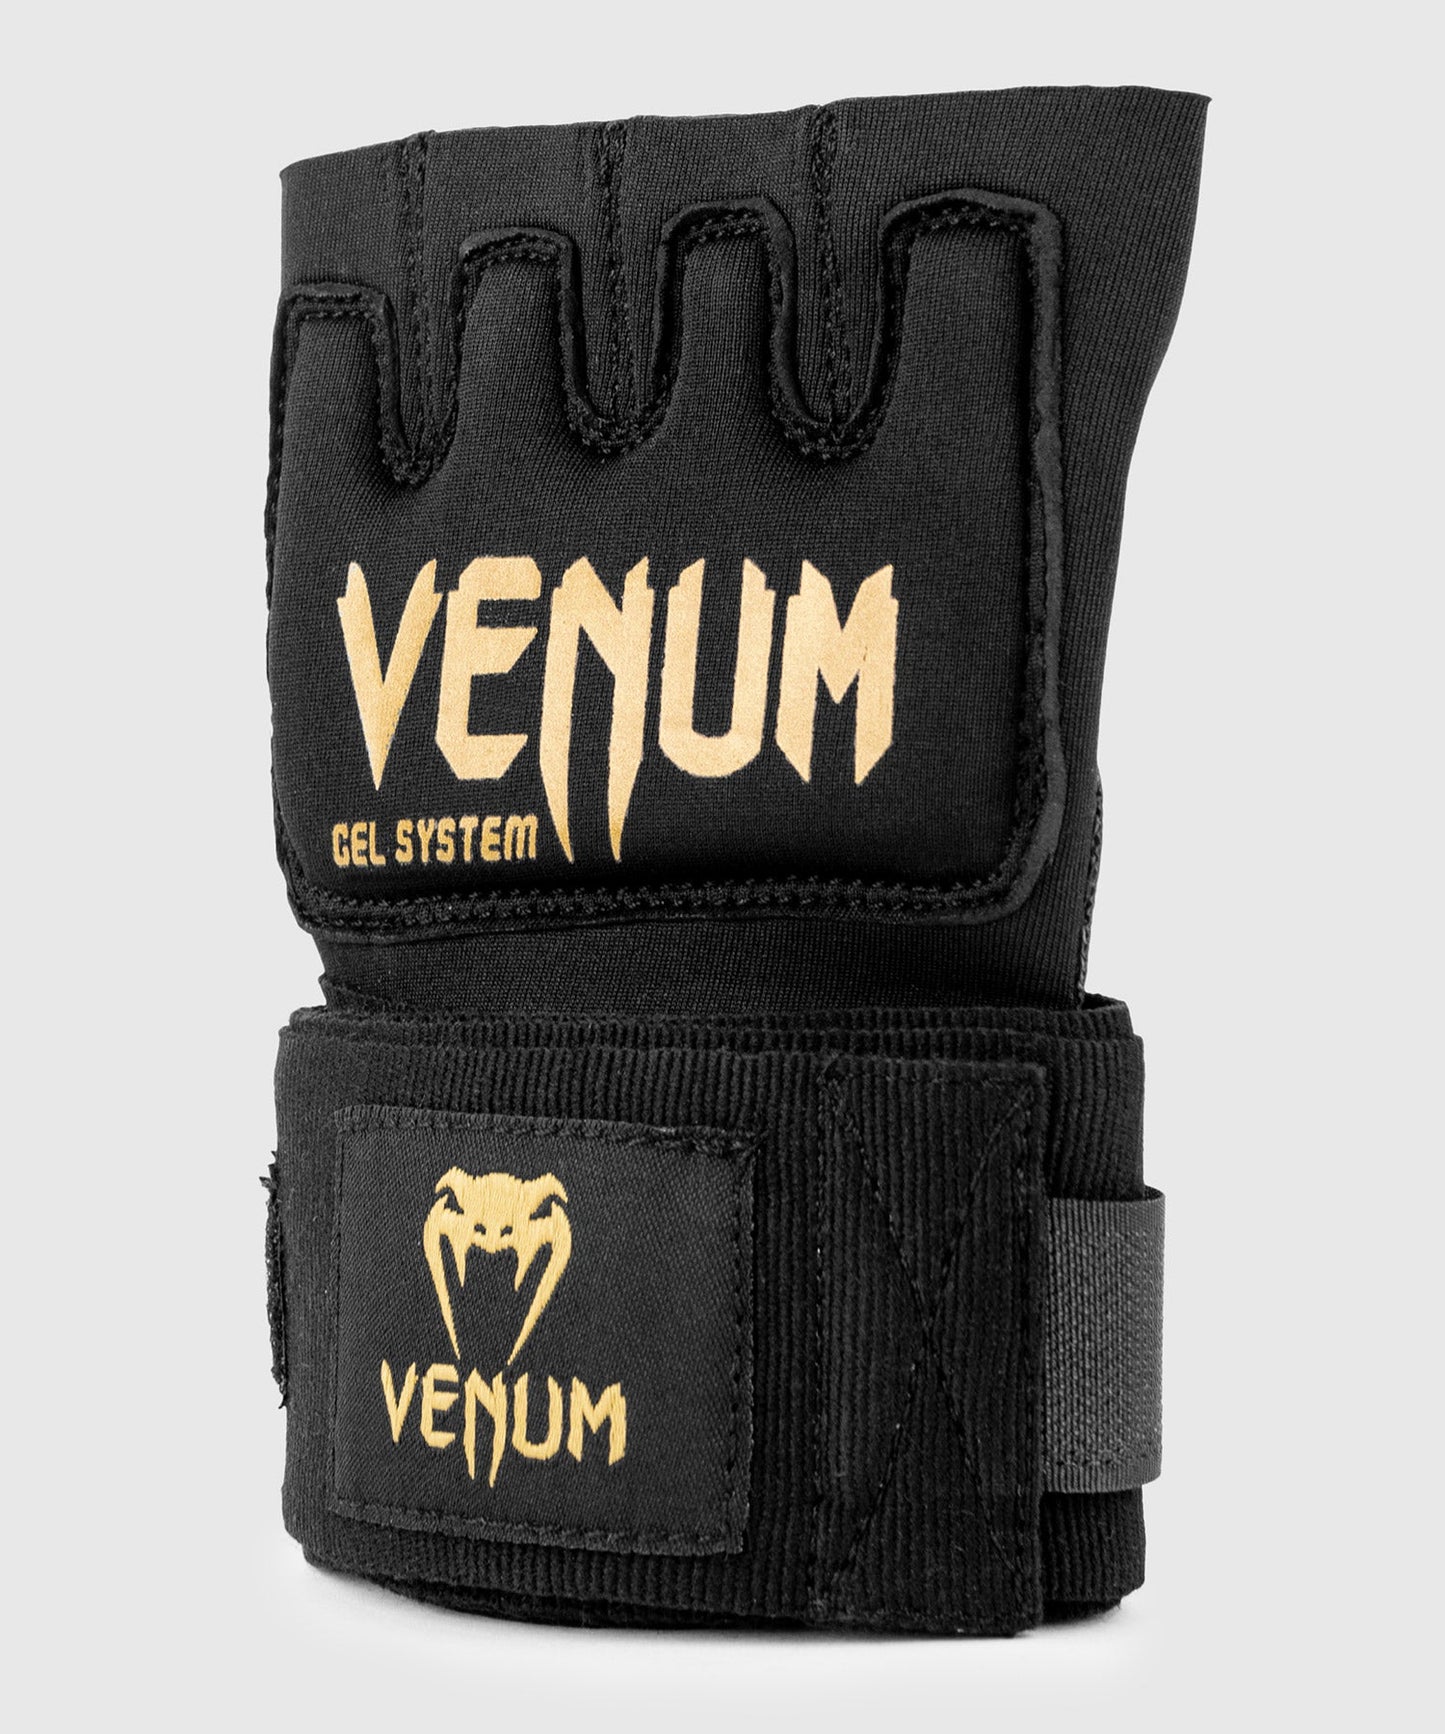 Venum Kontact Gel Glove Wraps - Black/Gold